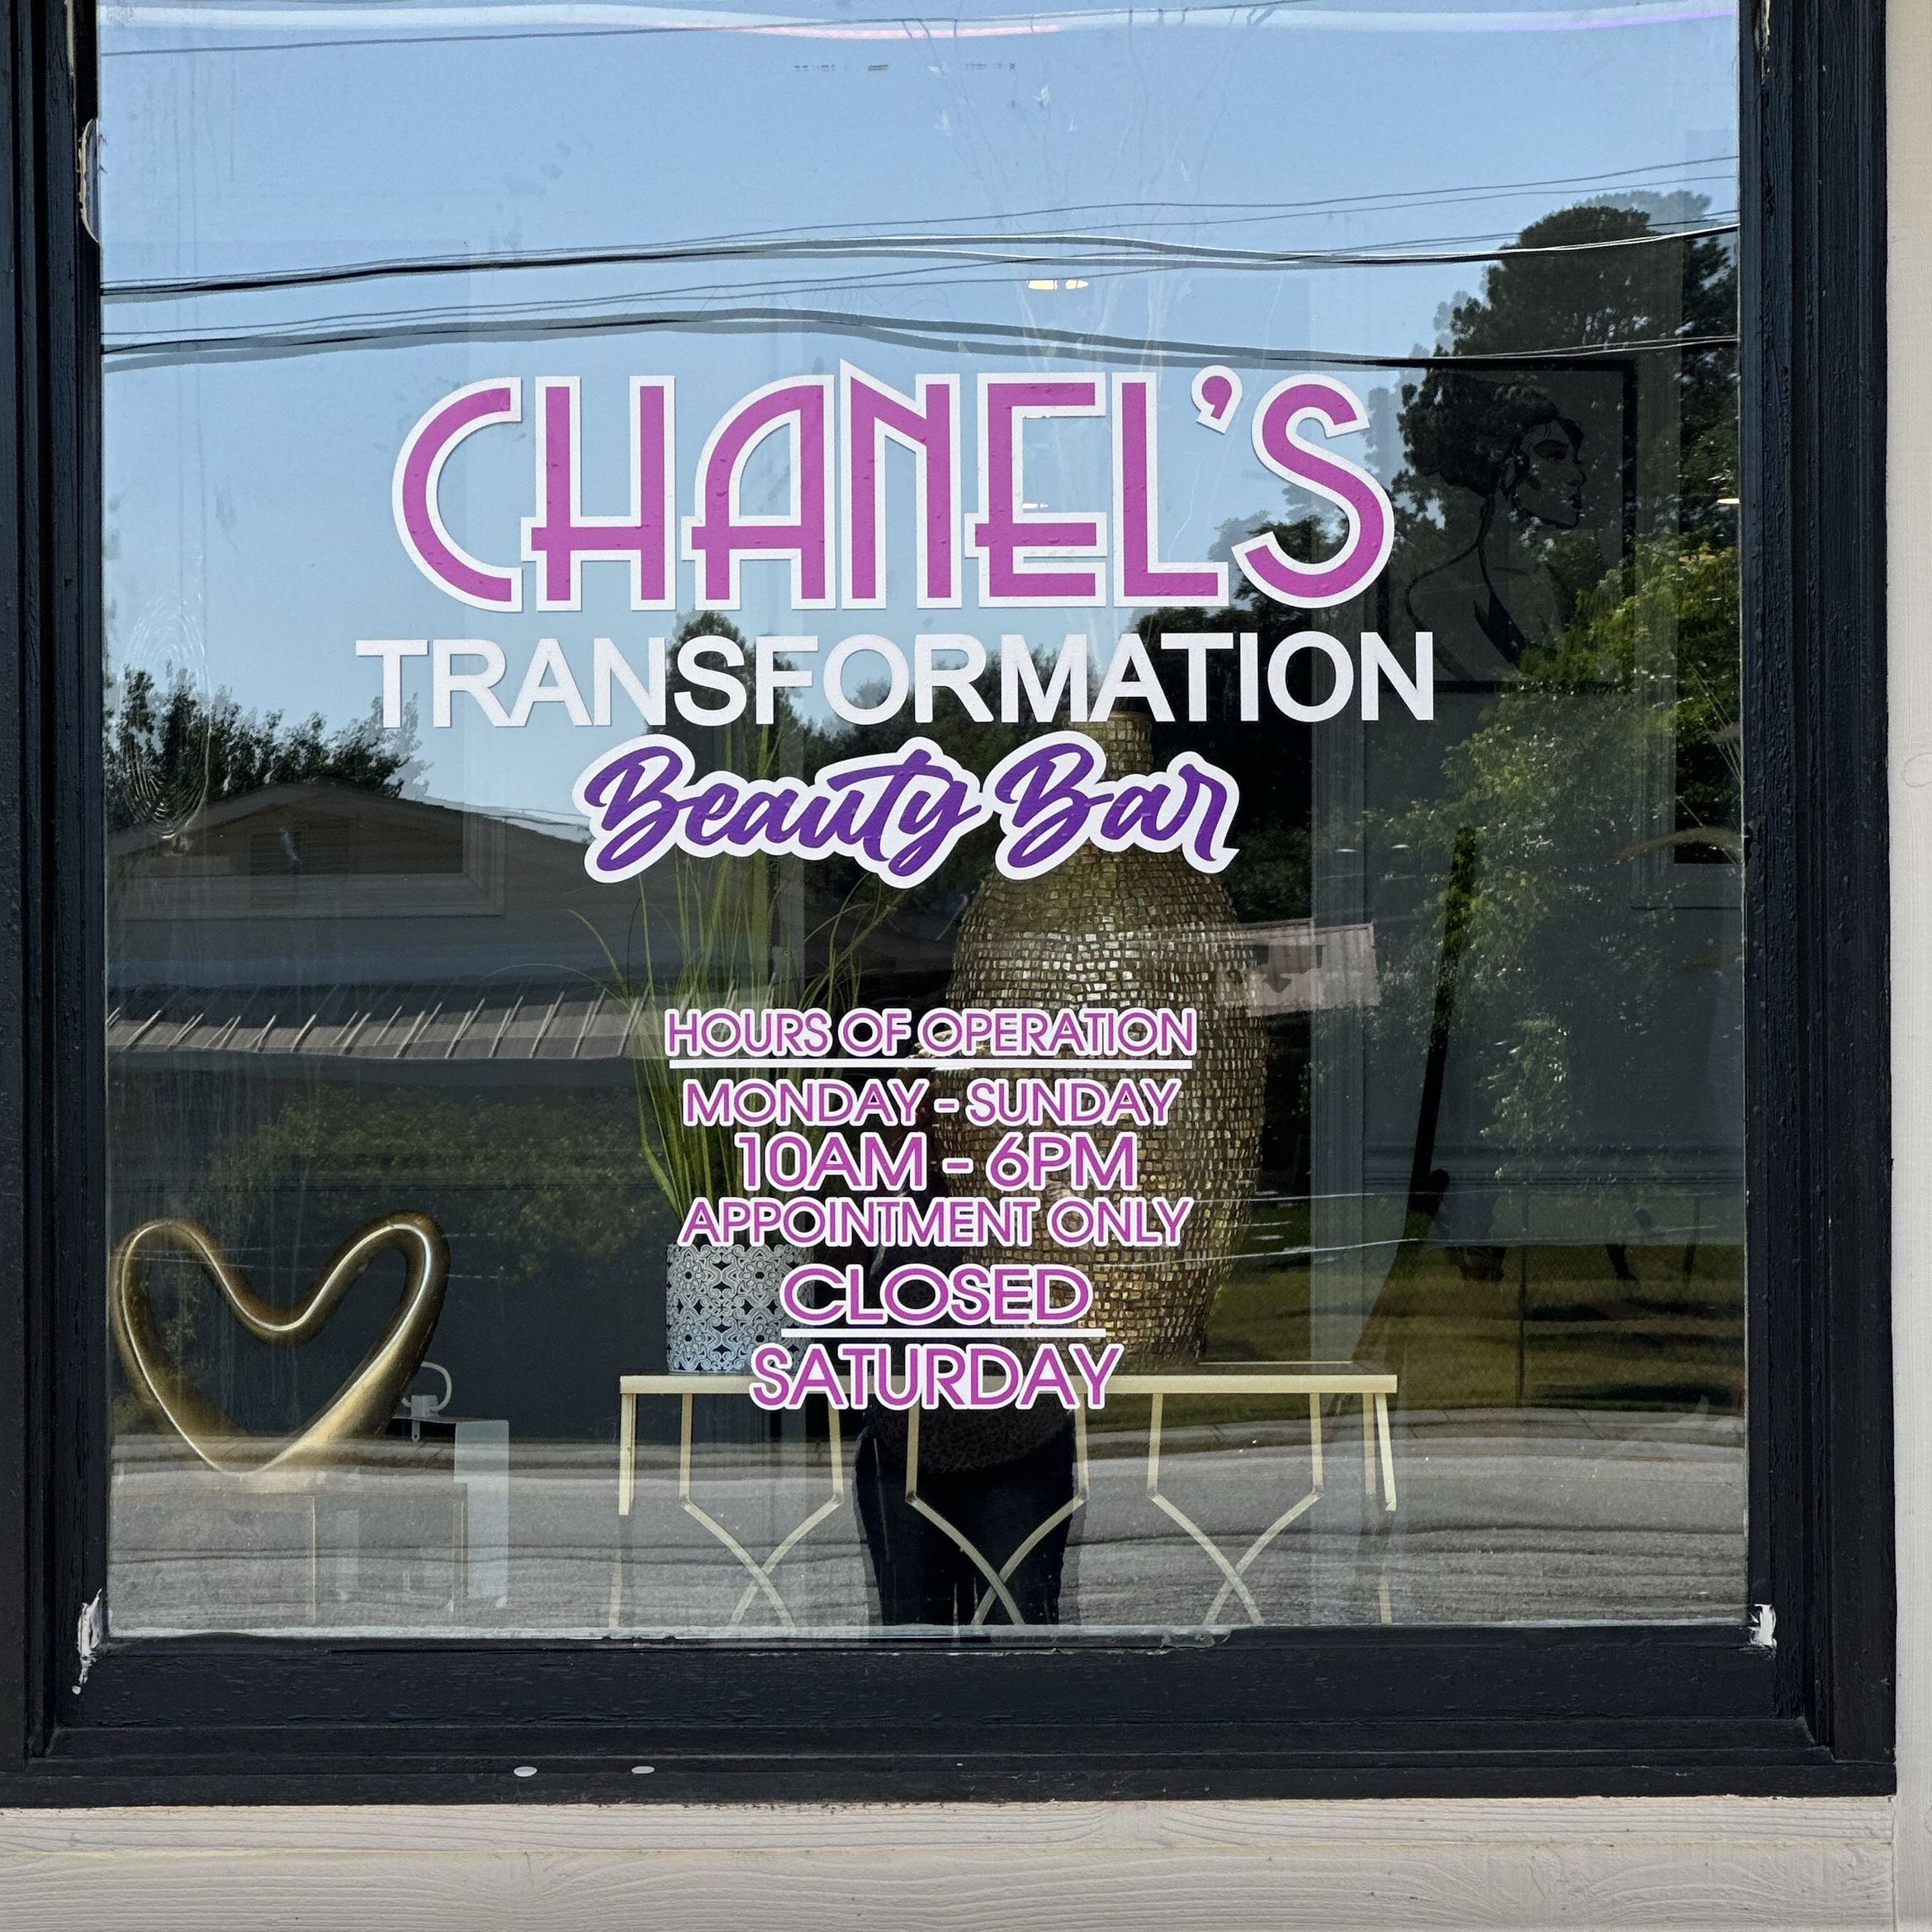 Chanel’s Transformation Beauty Bar, 401 Belmont Dr, Suite A, Warner Robins, 31088